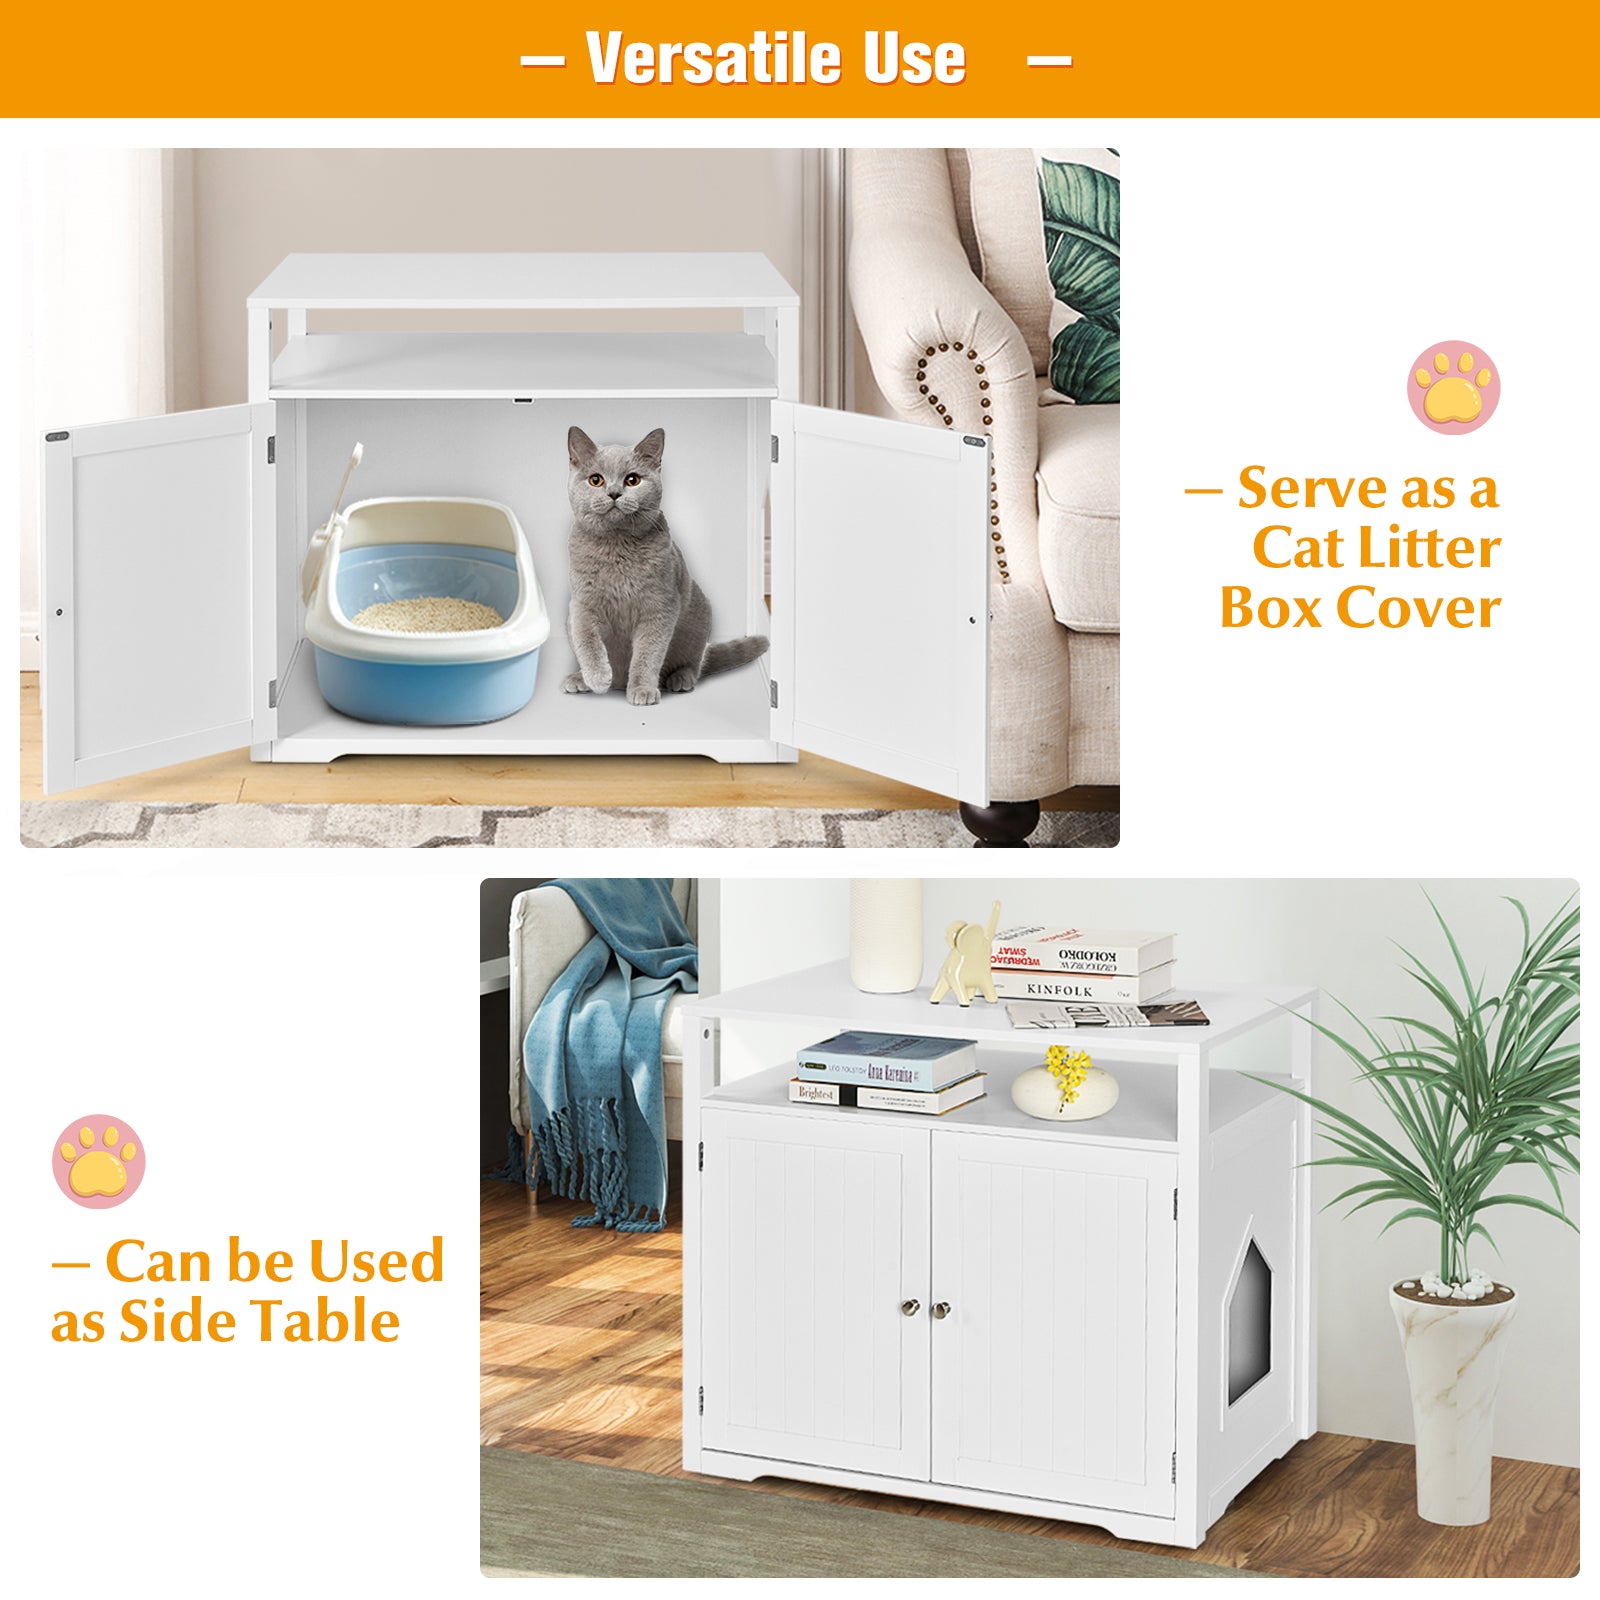 Infans Wooden Cat Litter Box Enclosure Hidden Cat Washroom W/ Storage Layer Animals & Pet Supplies > Pet Supplies > Cat Supplies > Cat Furniture Infans   